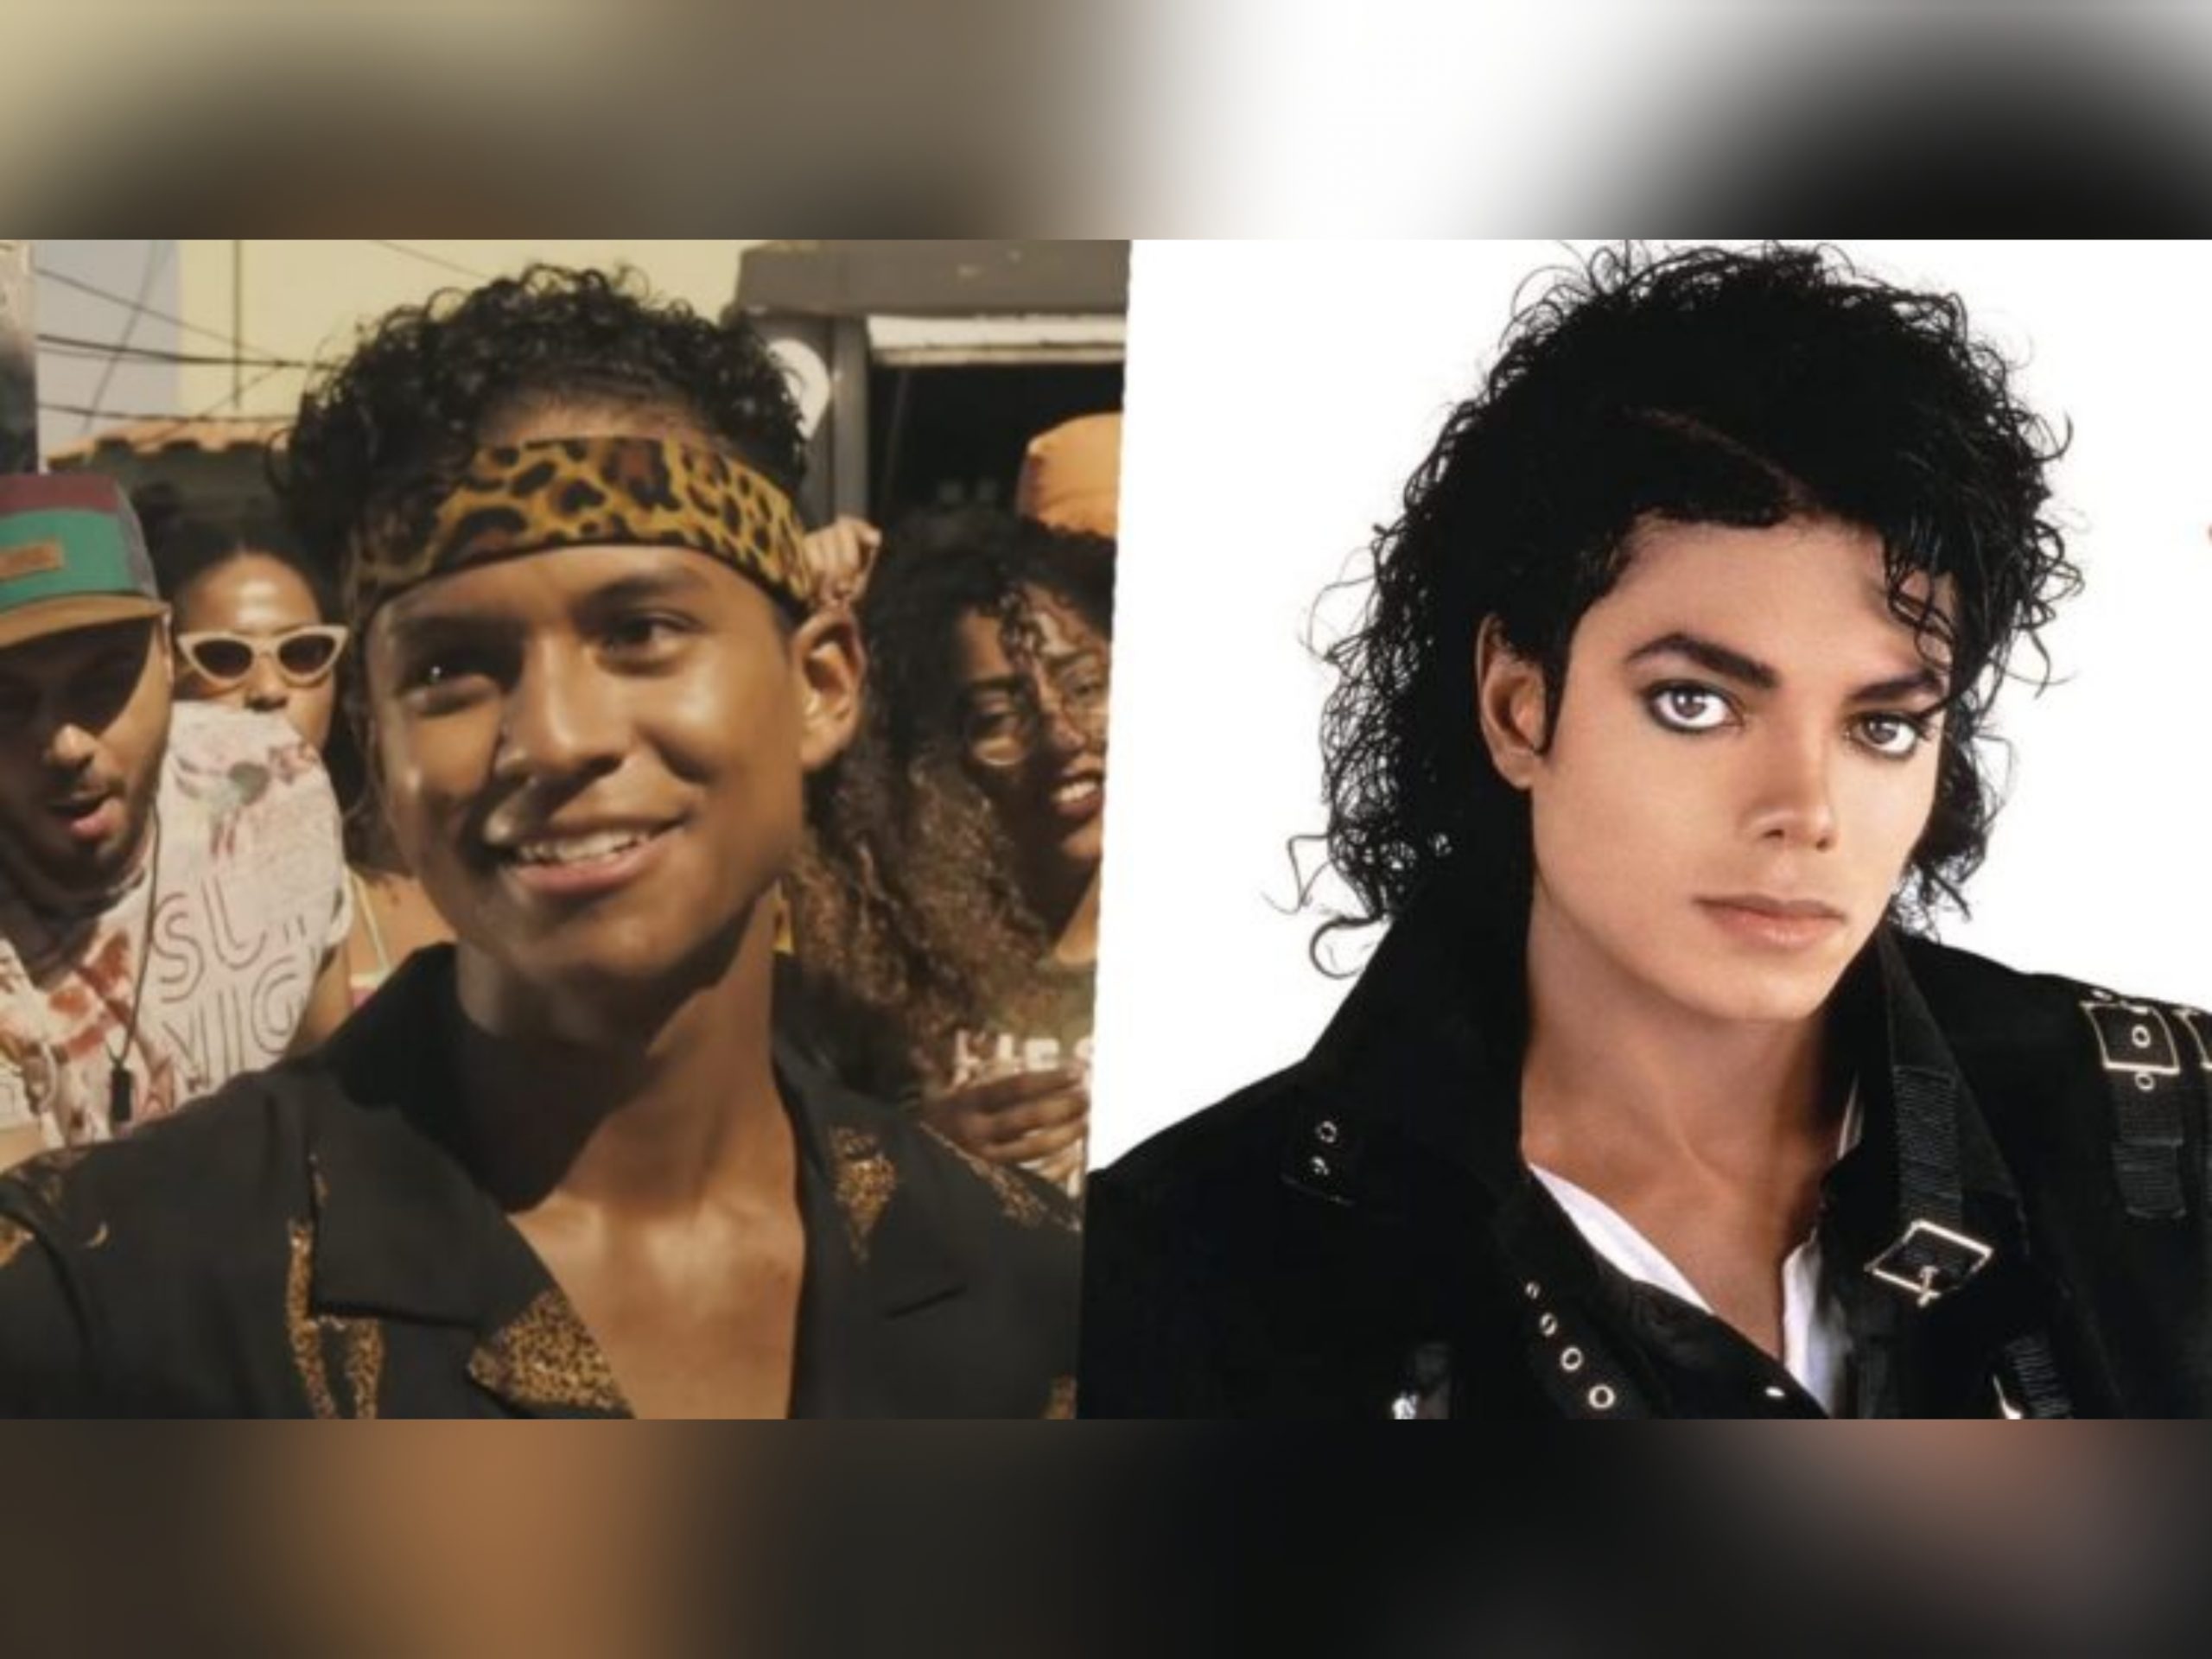 Michael Jackson’s Nephew Jaafar Jackson To Play King of Pop In Biopic